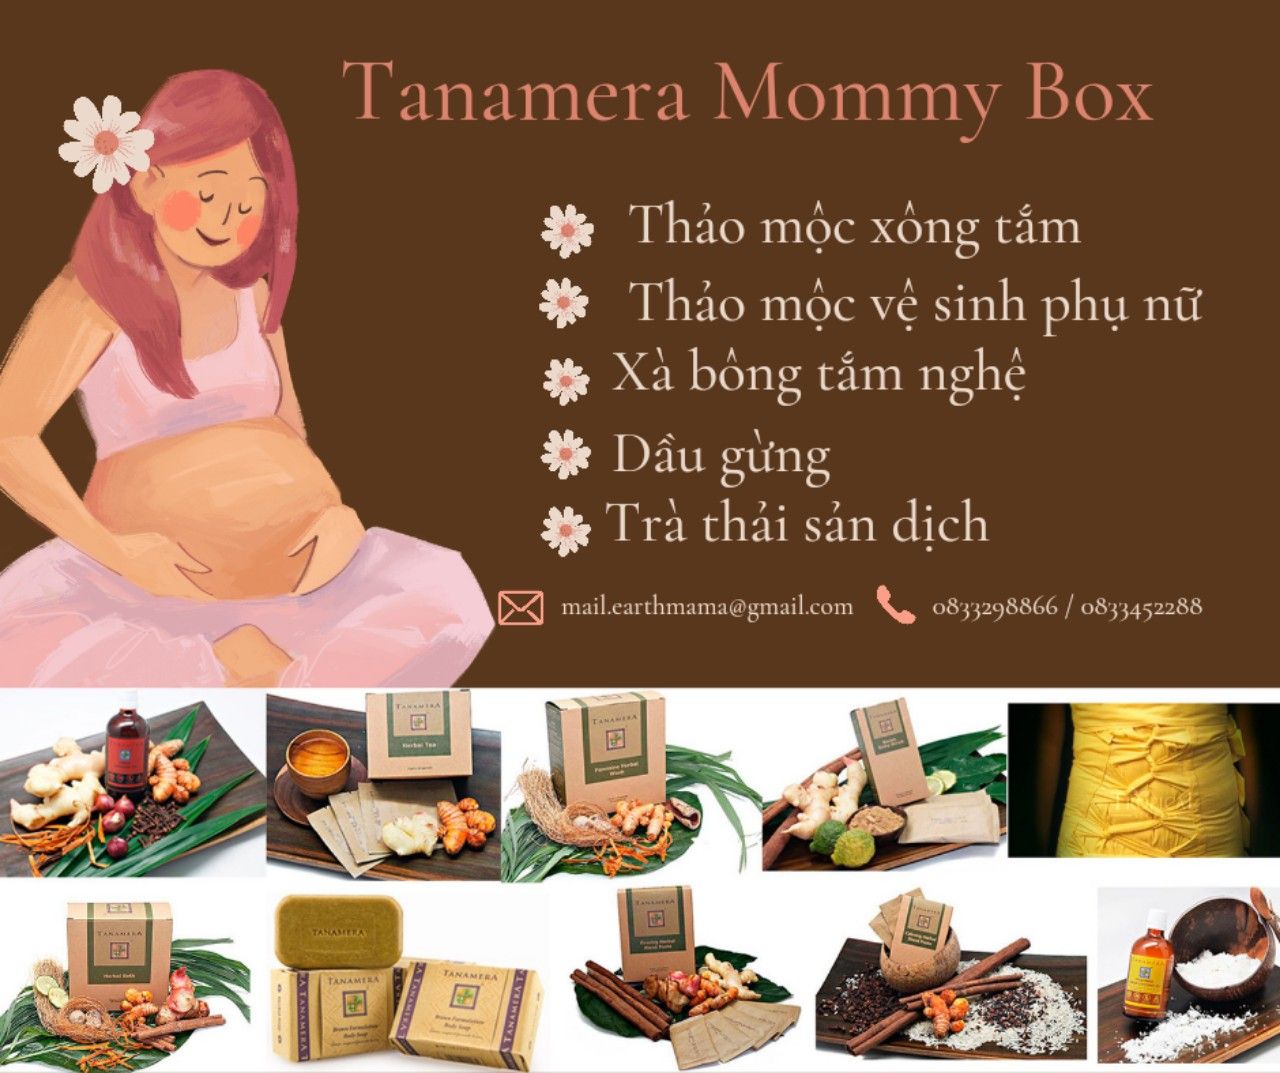  E.M Tanamera Mommy Box 